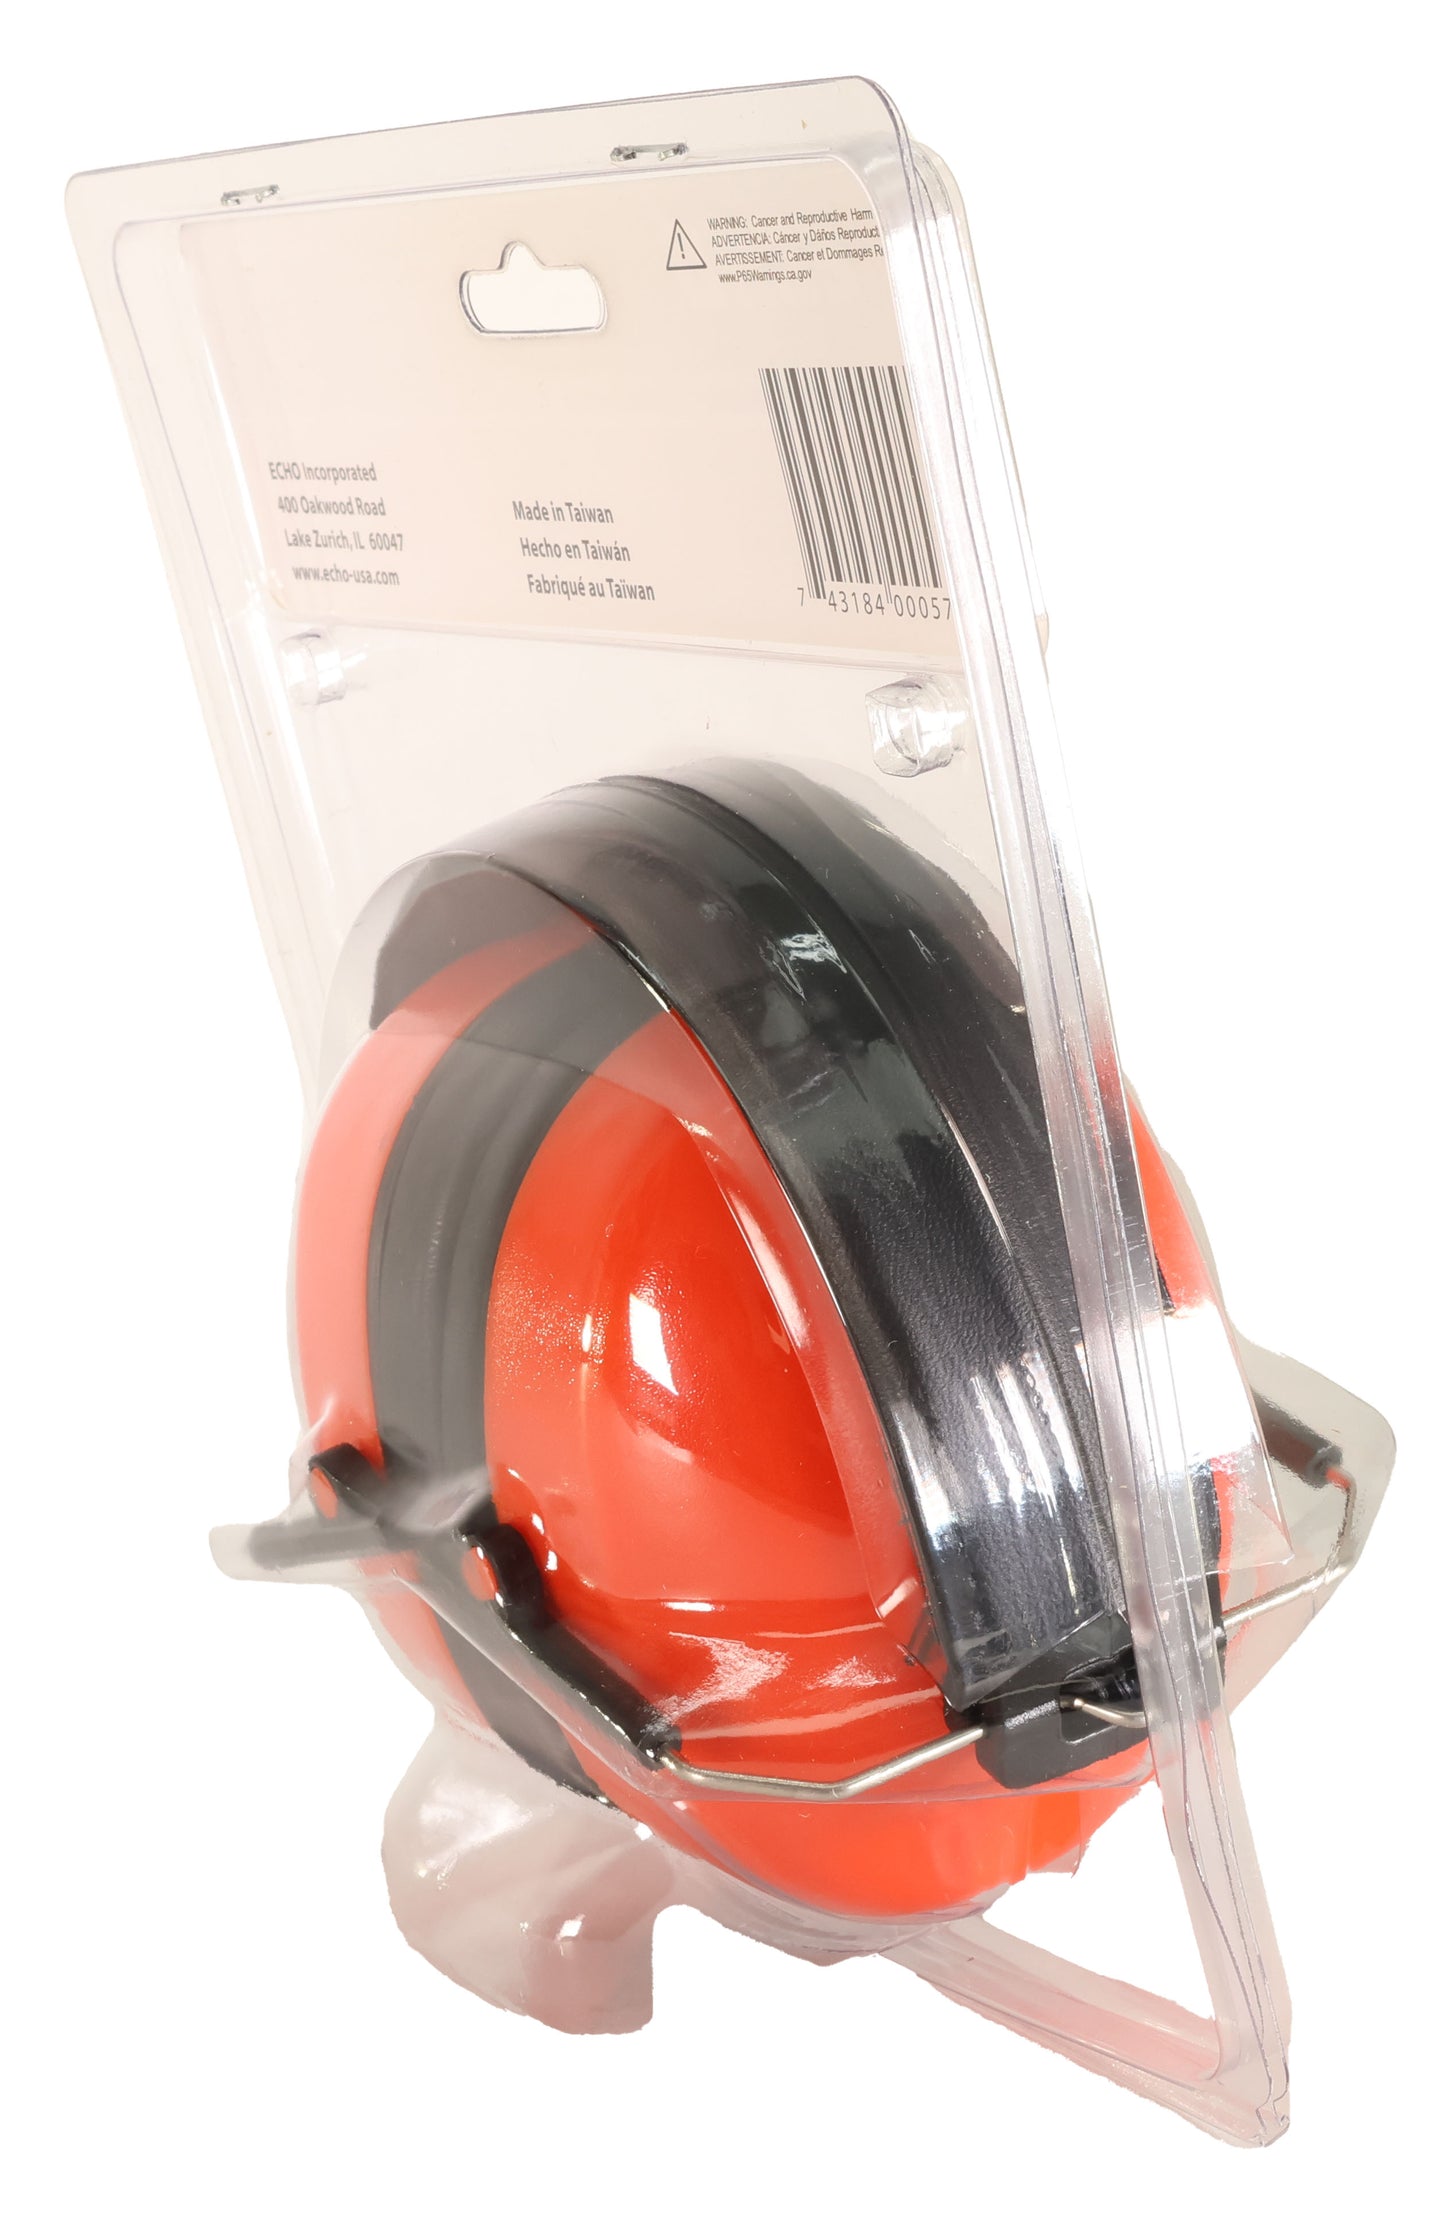 Echo Original Equipment Protective Earmuffs (NRR 29 Rating) - 99988801520